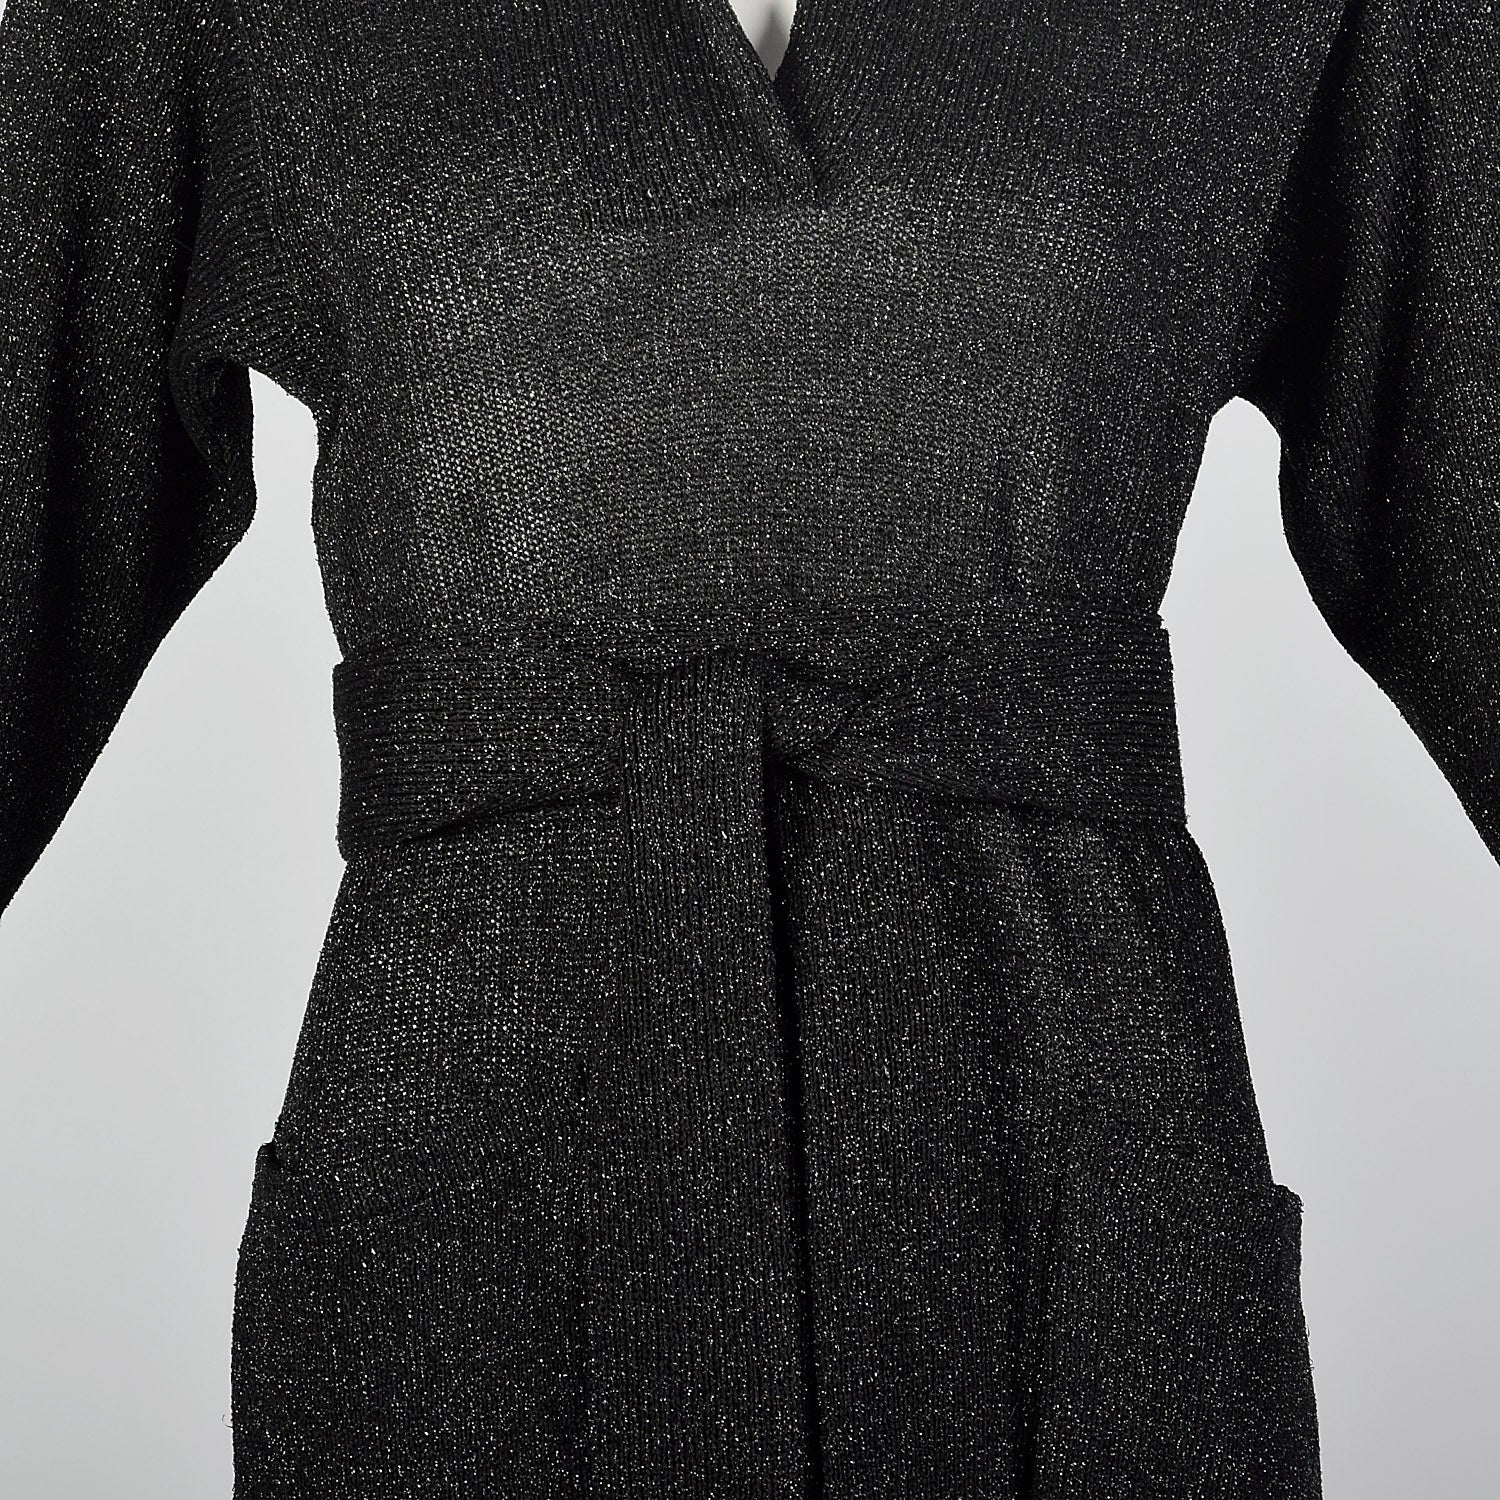 Large 1970s Black Lurex Knit Dress – Style & Salvage